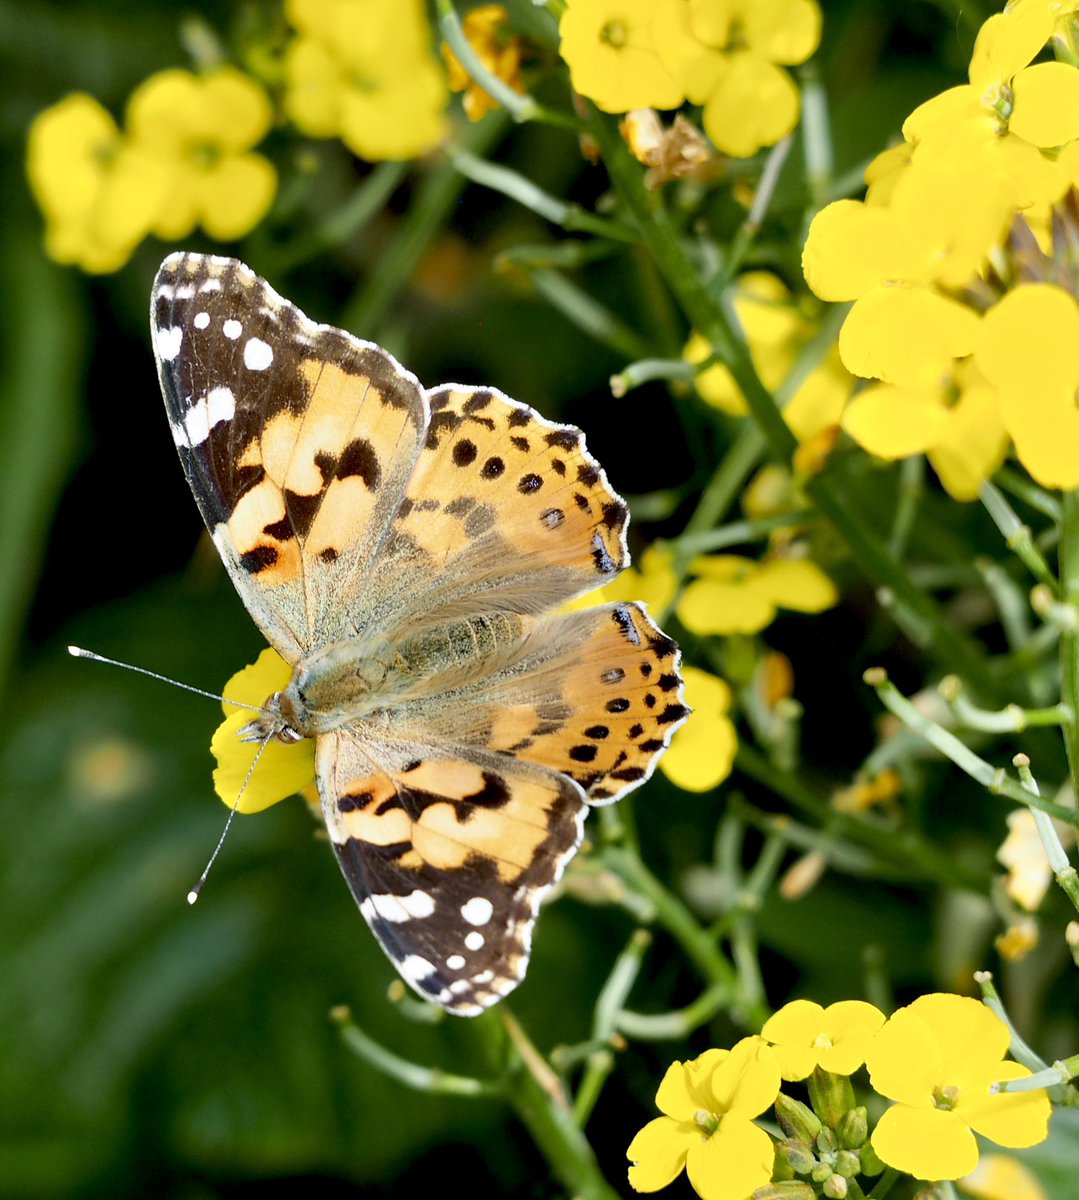 Beautiful Painted Lady today in Bedfordshire @savebutterflies @ukbutterflies